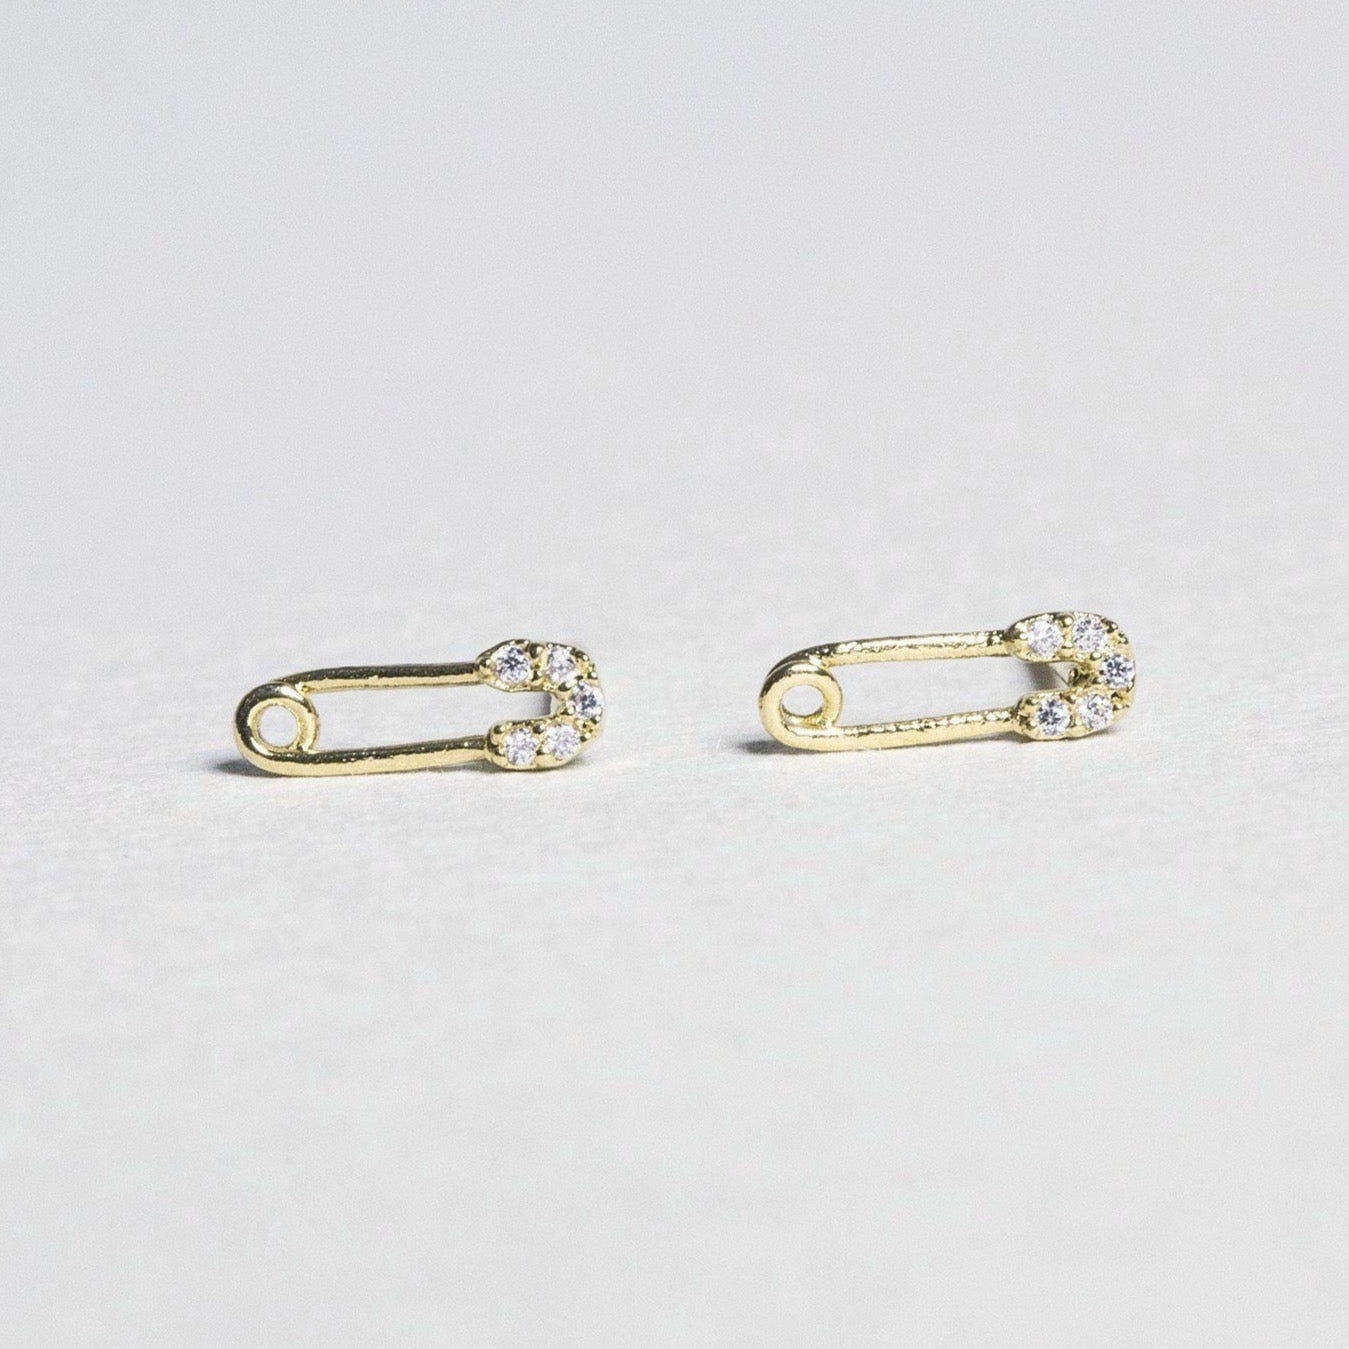 Tashi - Safety pin earrings